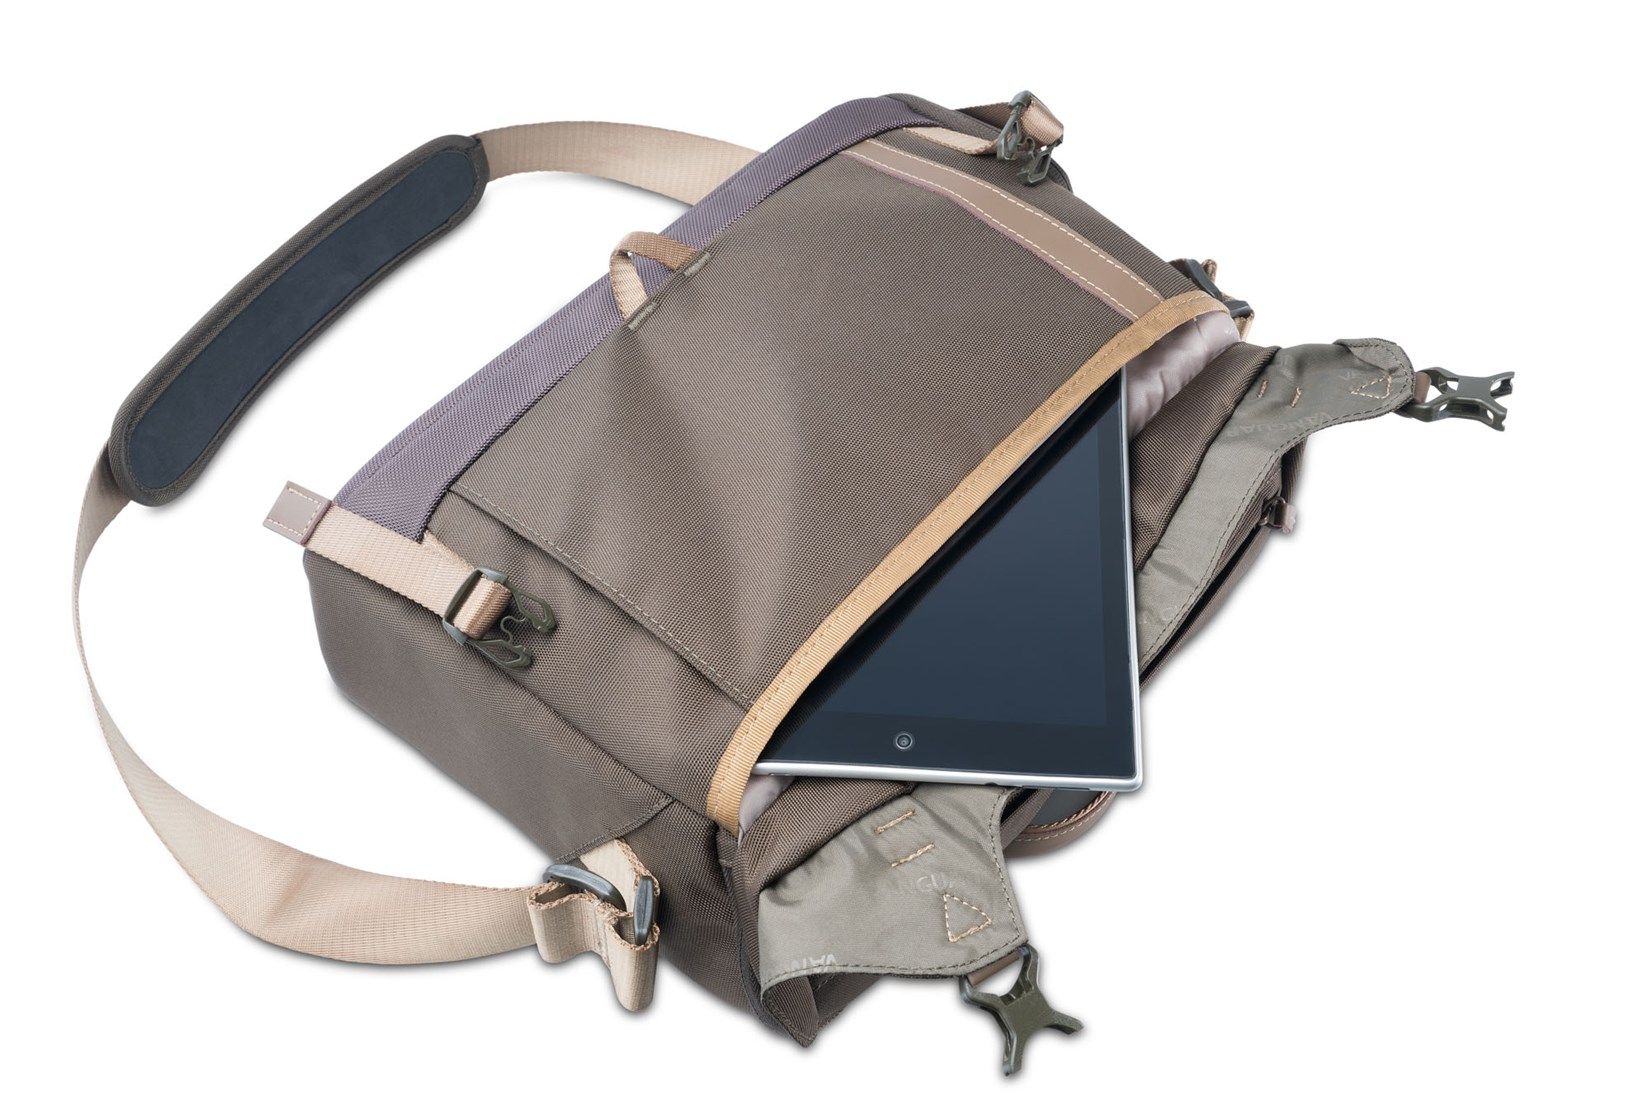 Vesta Aspire 25 GY Shoulder Bag - Grey - Vanguard